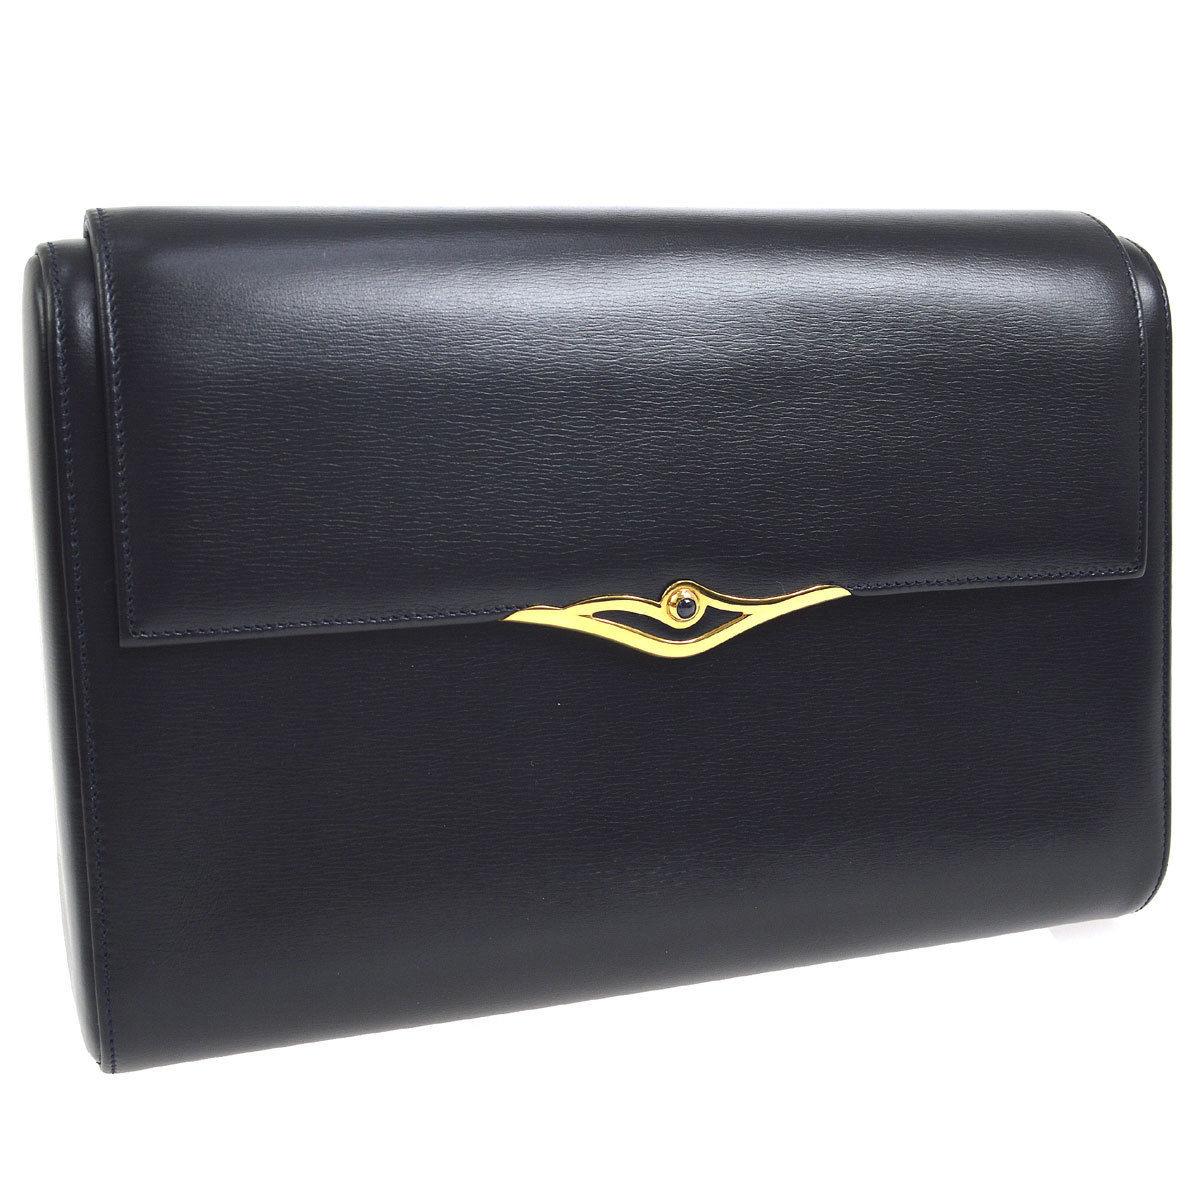 Cartier Dark Midnight Blue Leather Gold Emblem Envelope Evening Clutch Flap Bag